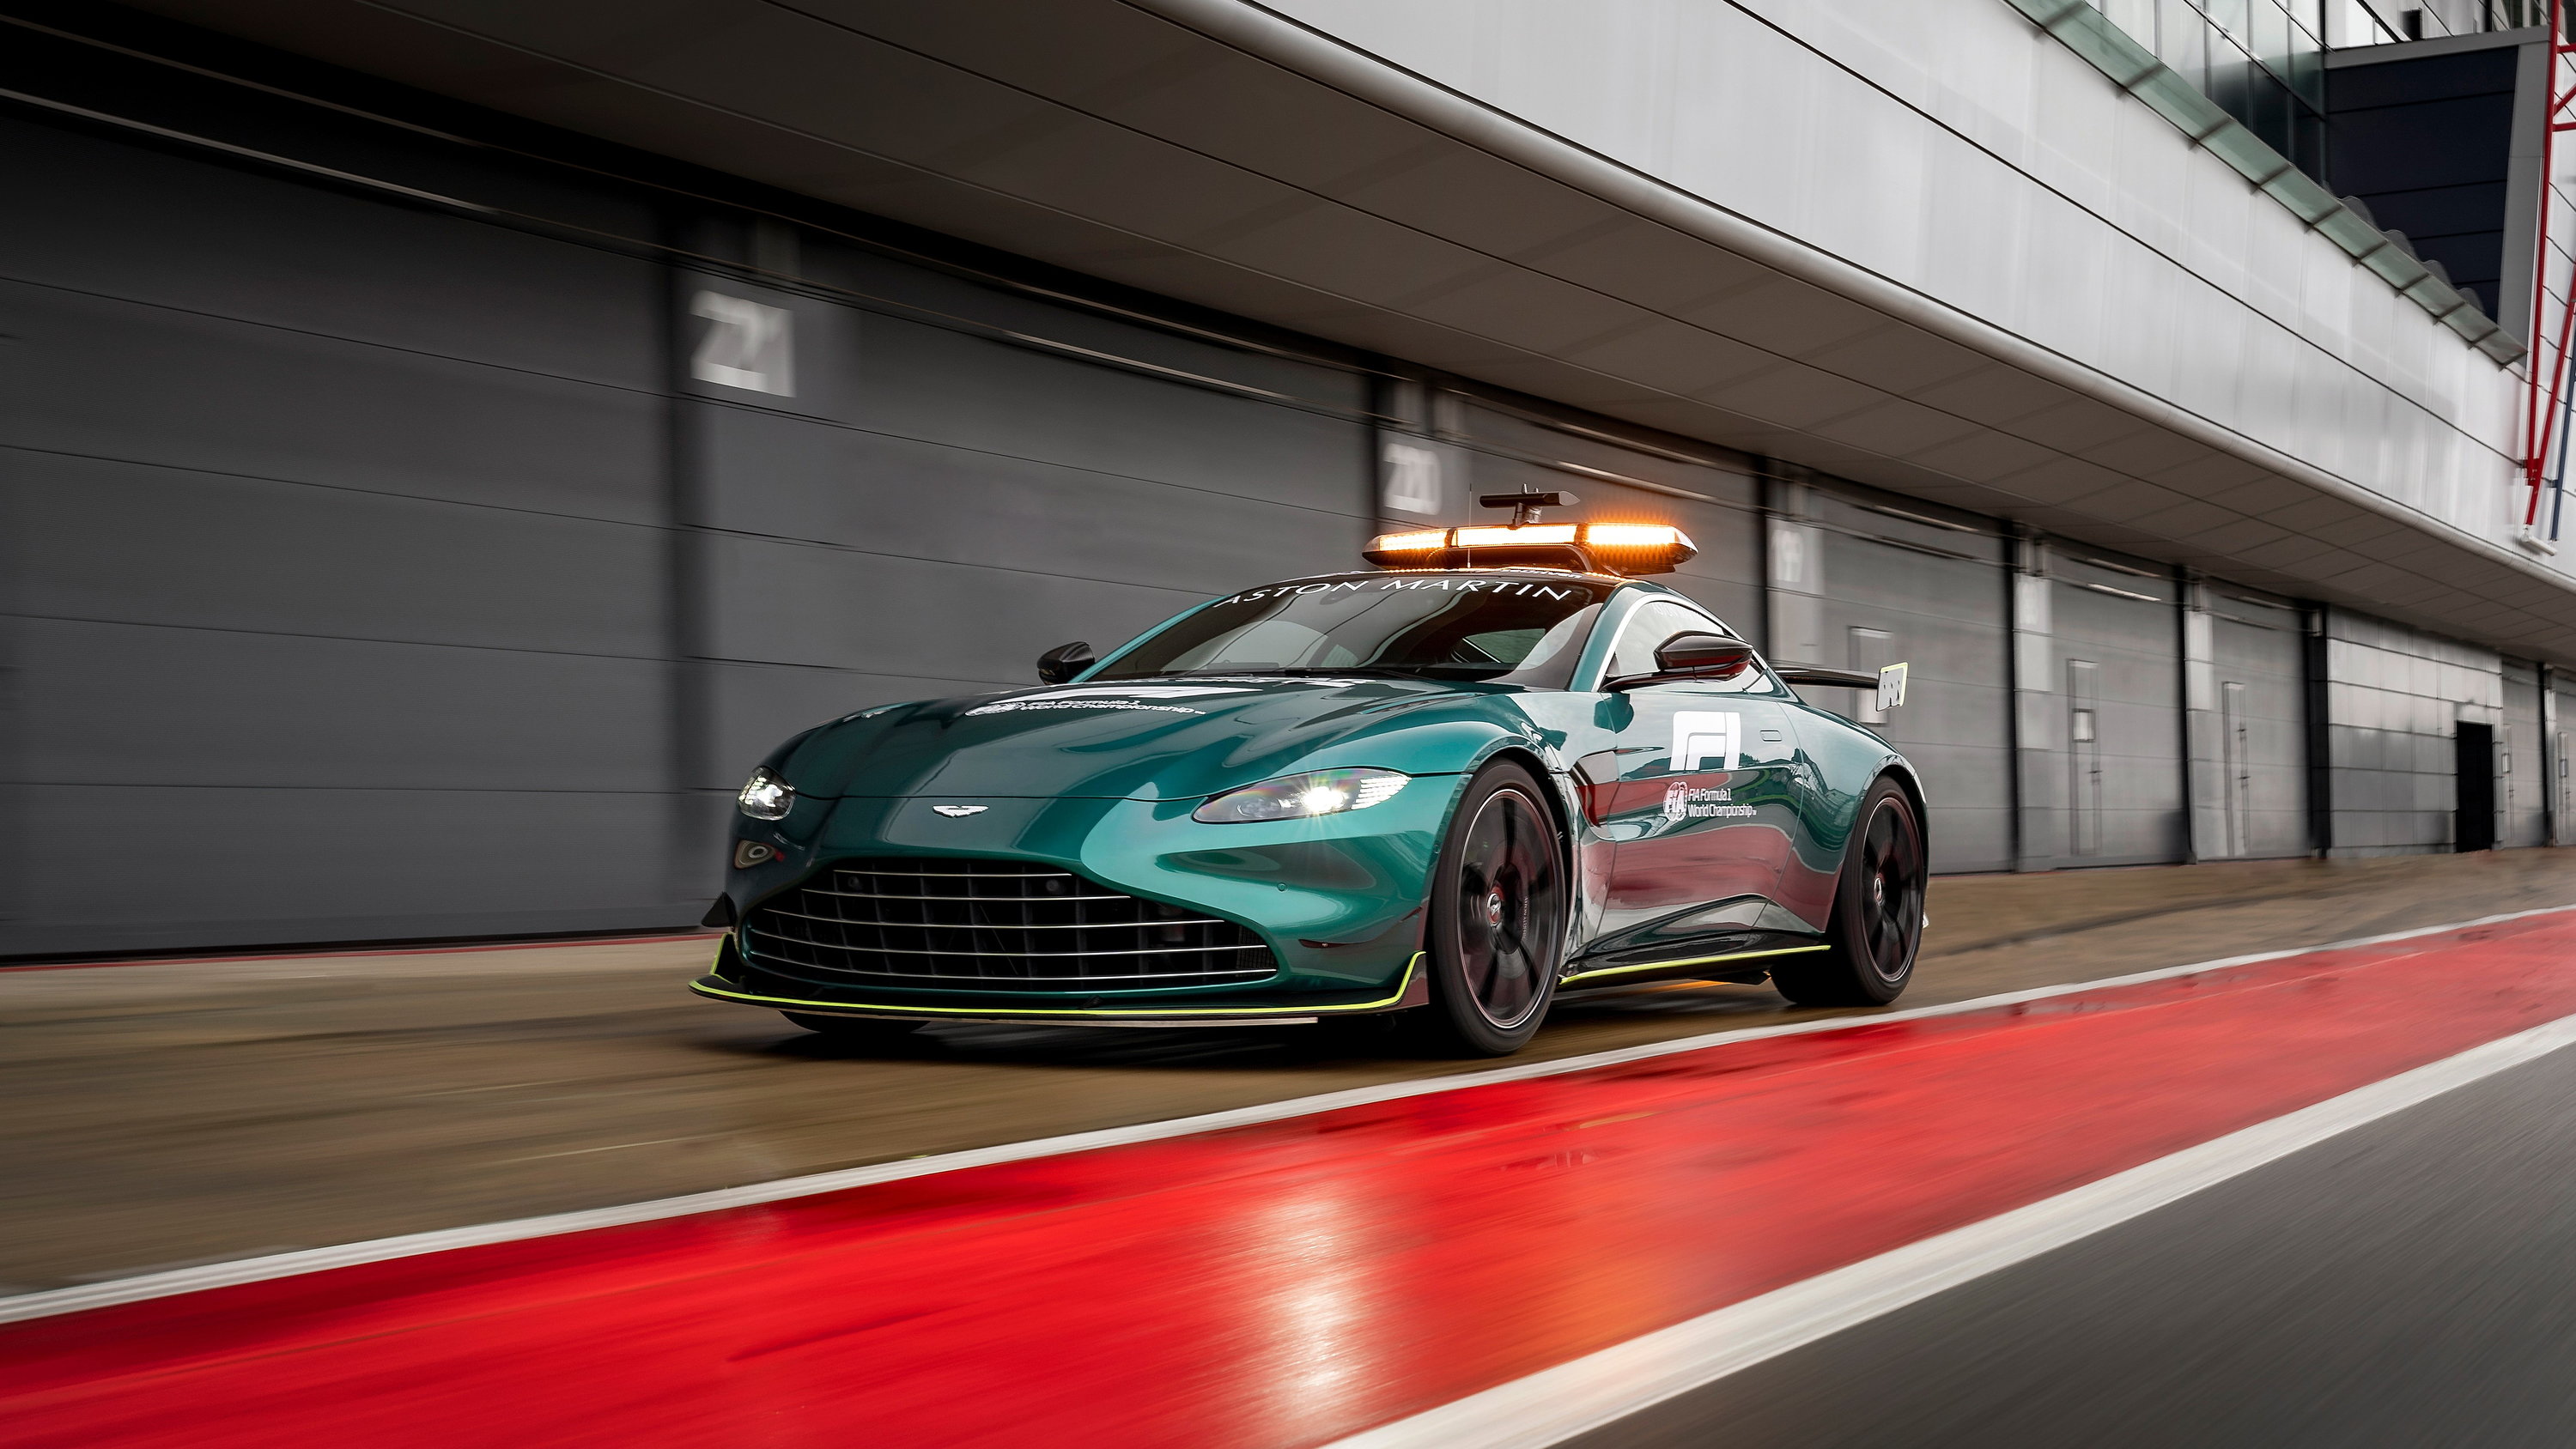 Aston Martin Reveals New Safety Car for the 2021 F1 Season | 6speedonline